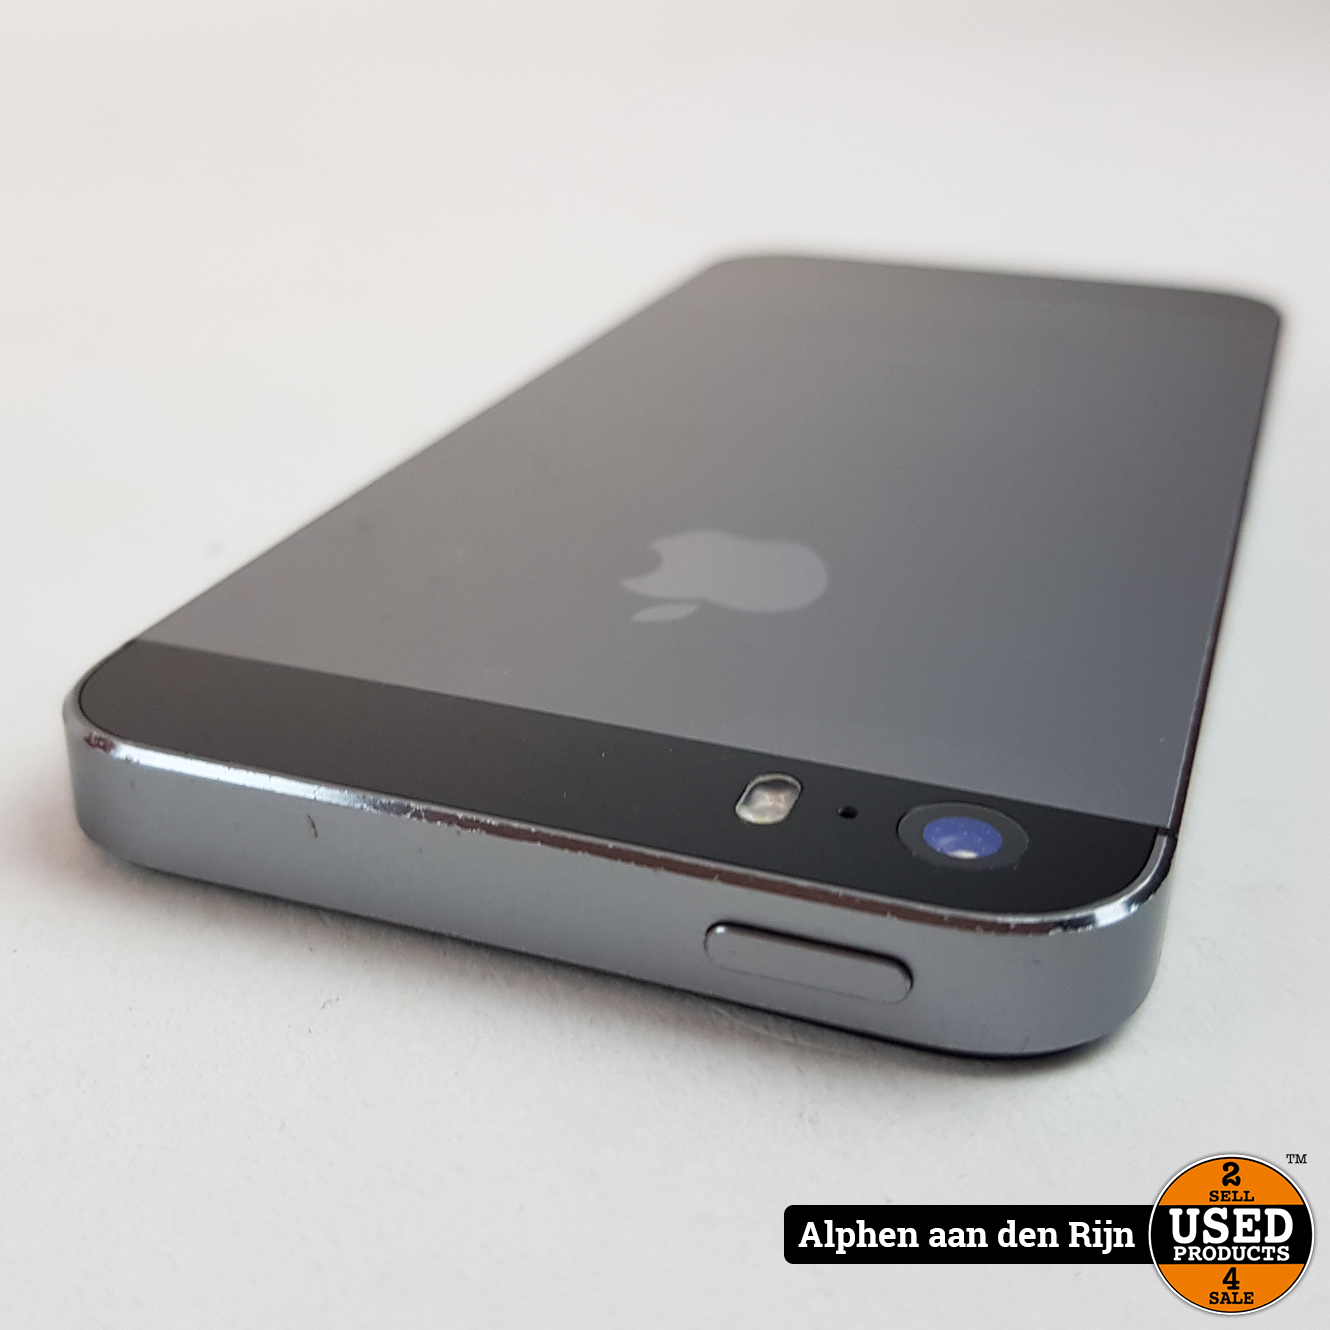 Roestig Split entiteit Apple iPhone 5s 16gb Space gray - Used Products Alphen aan den Rijn